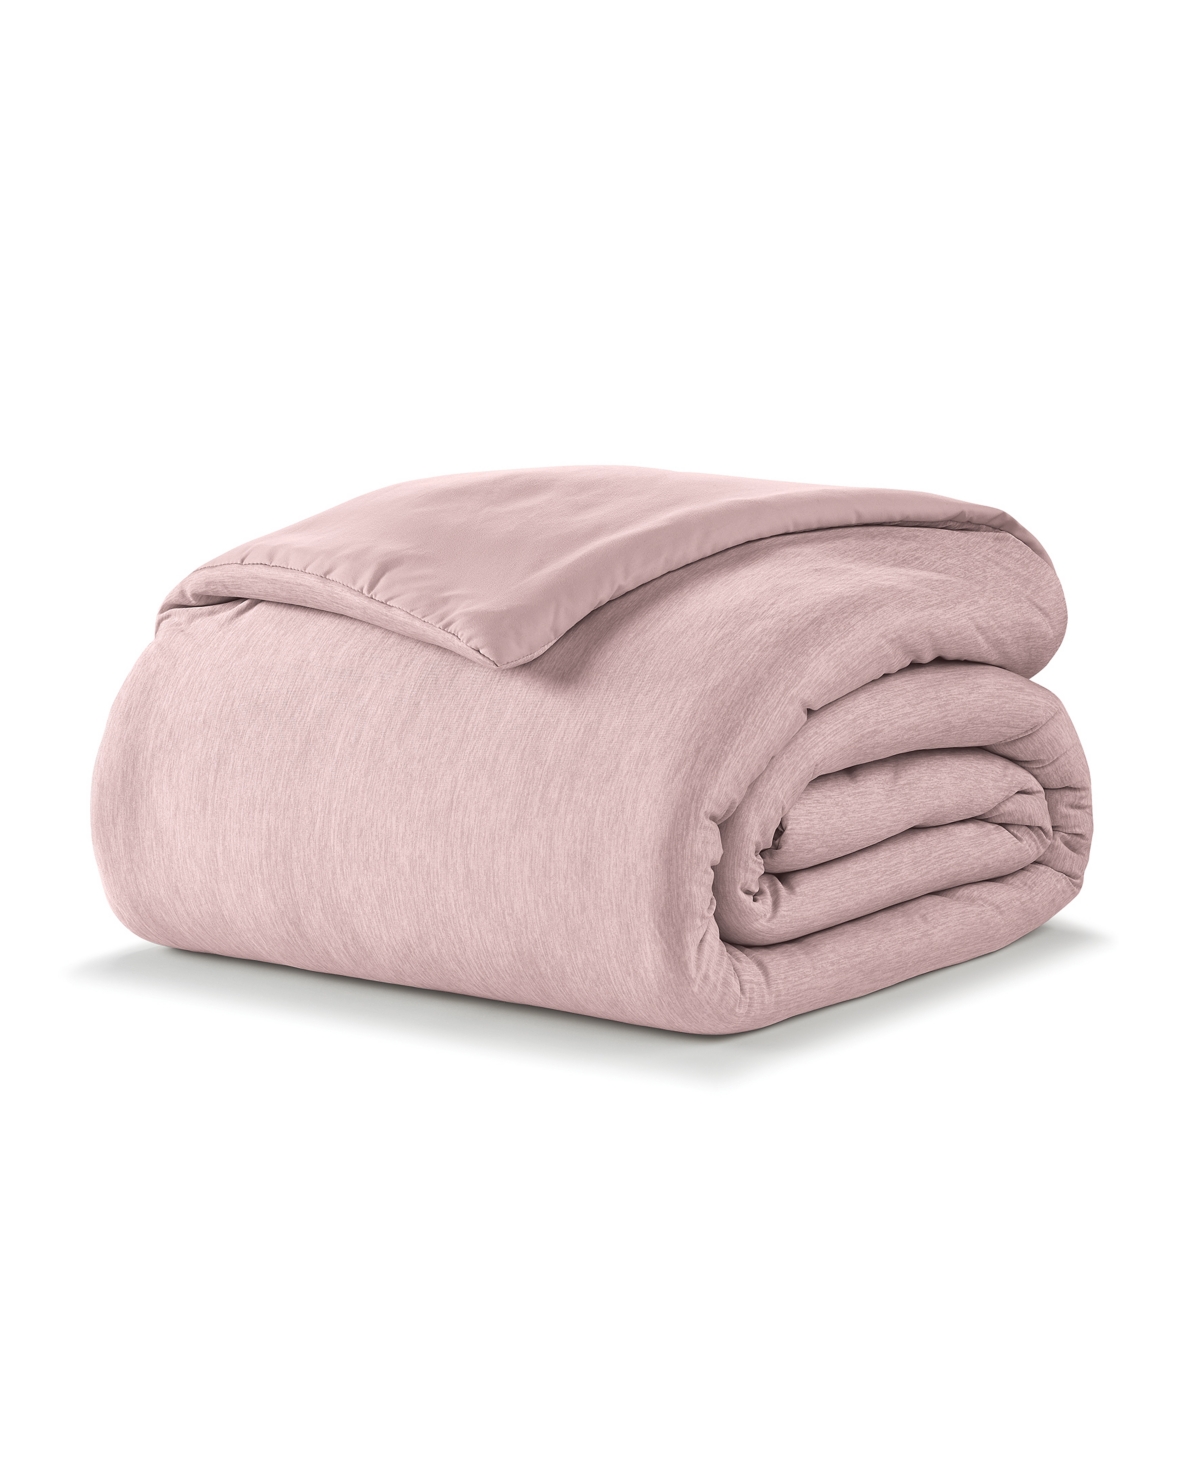 Ella Jayne Cooling Jersey Down-alternative Comforter, Twin In Rose